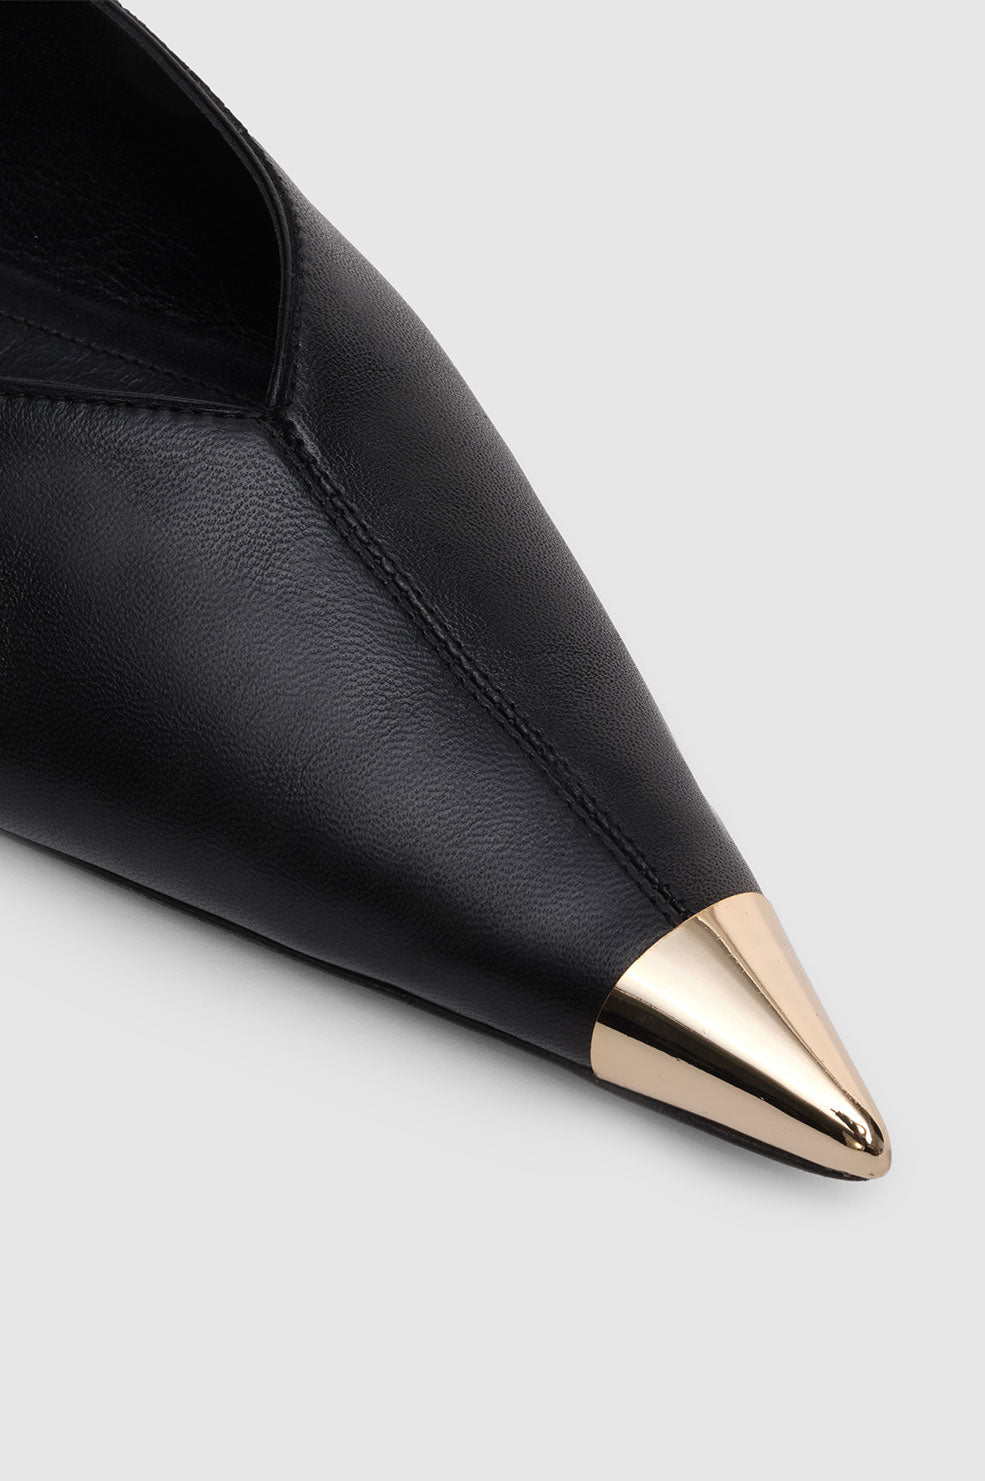 ANINE BING Nina Flats With Metal Toe Cap - Black - Detail View